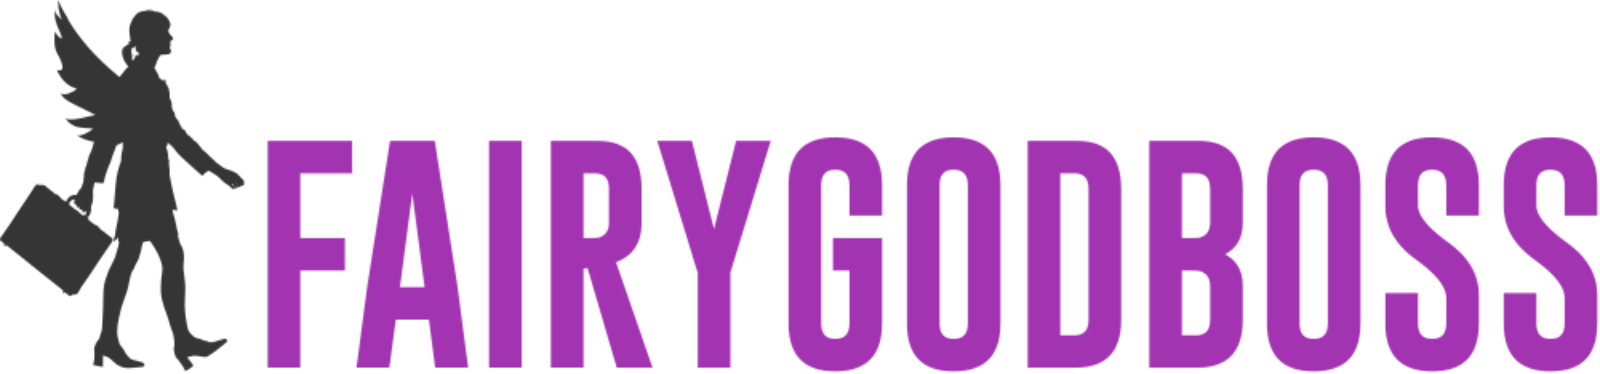 fairygodboss-logo.png